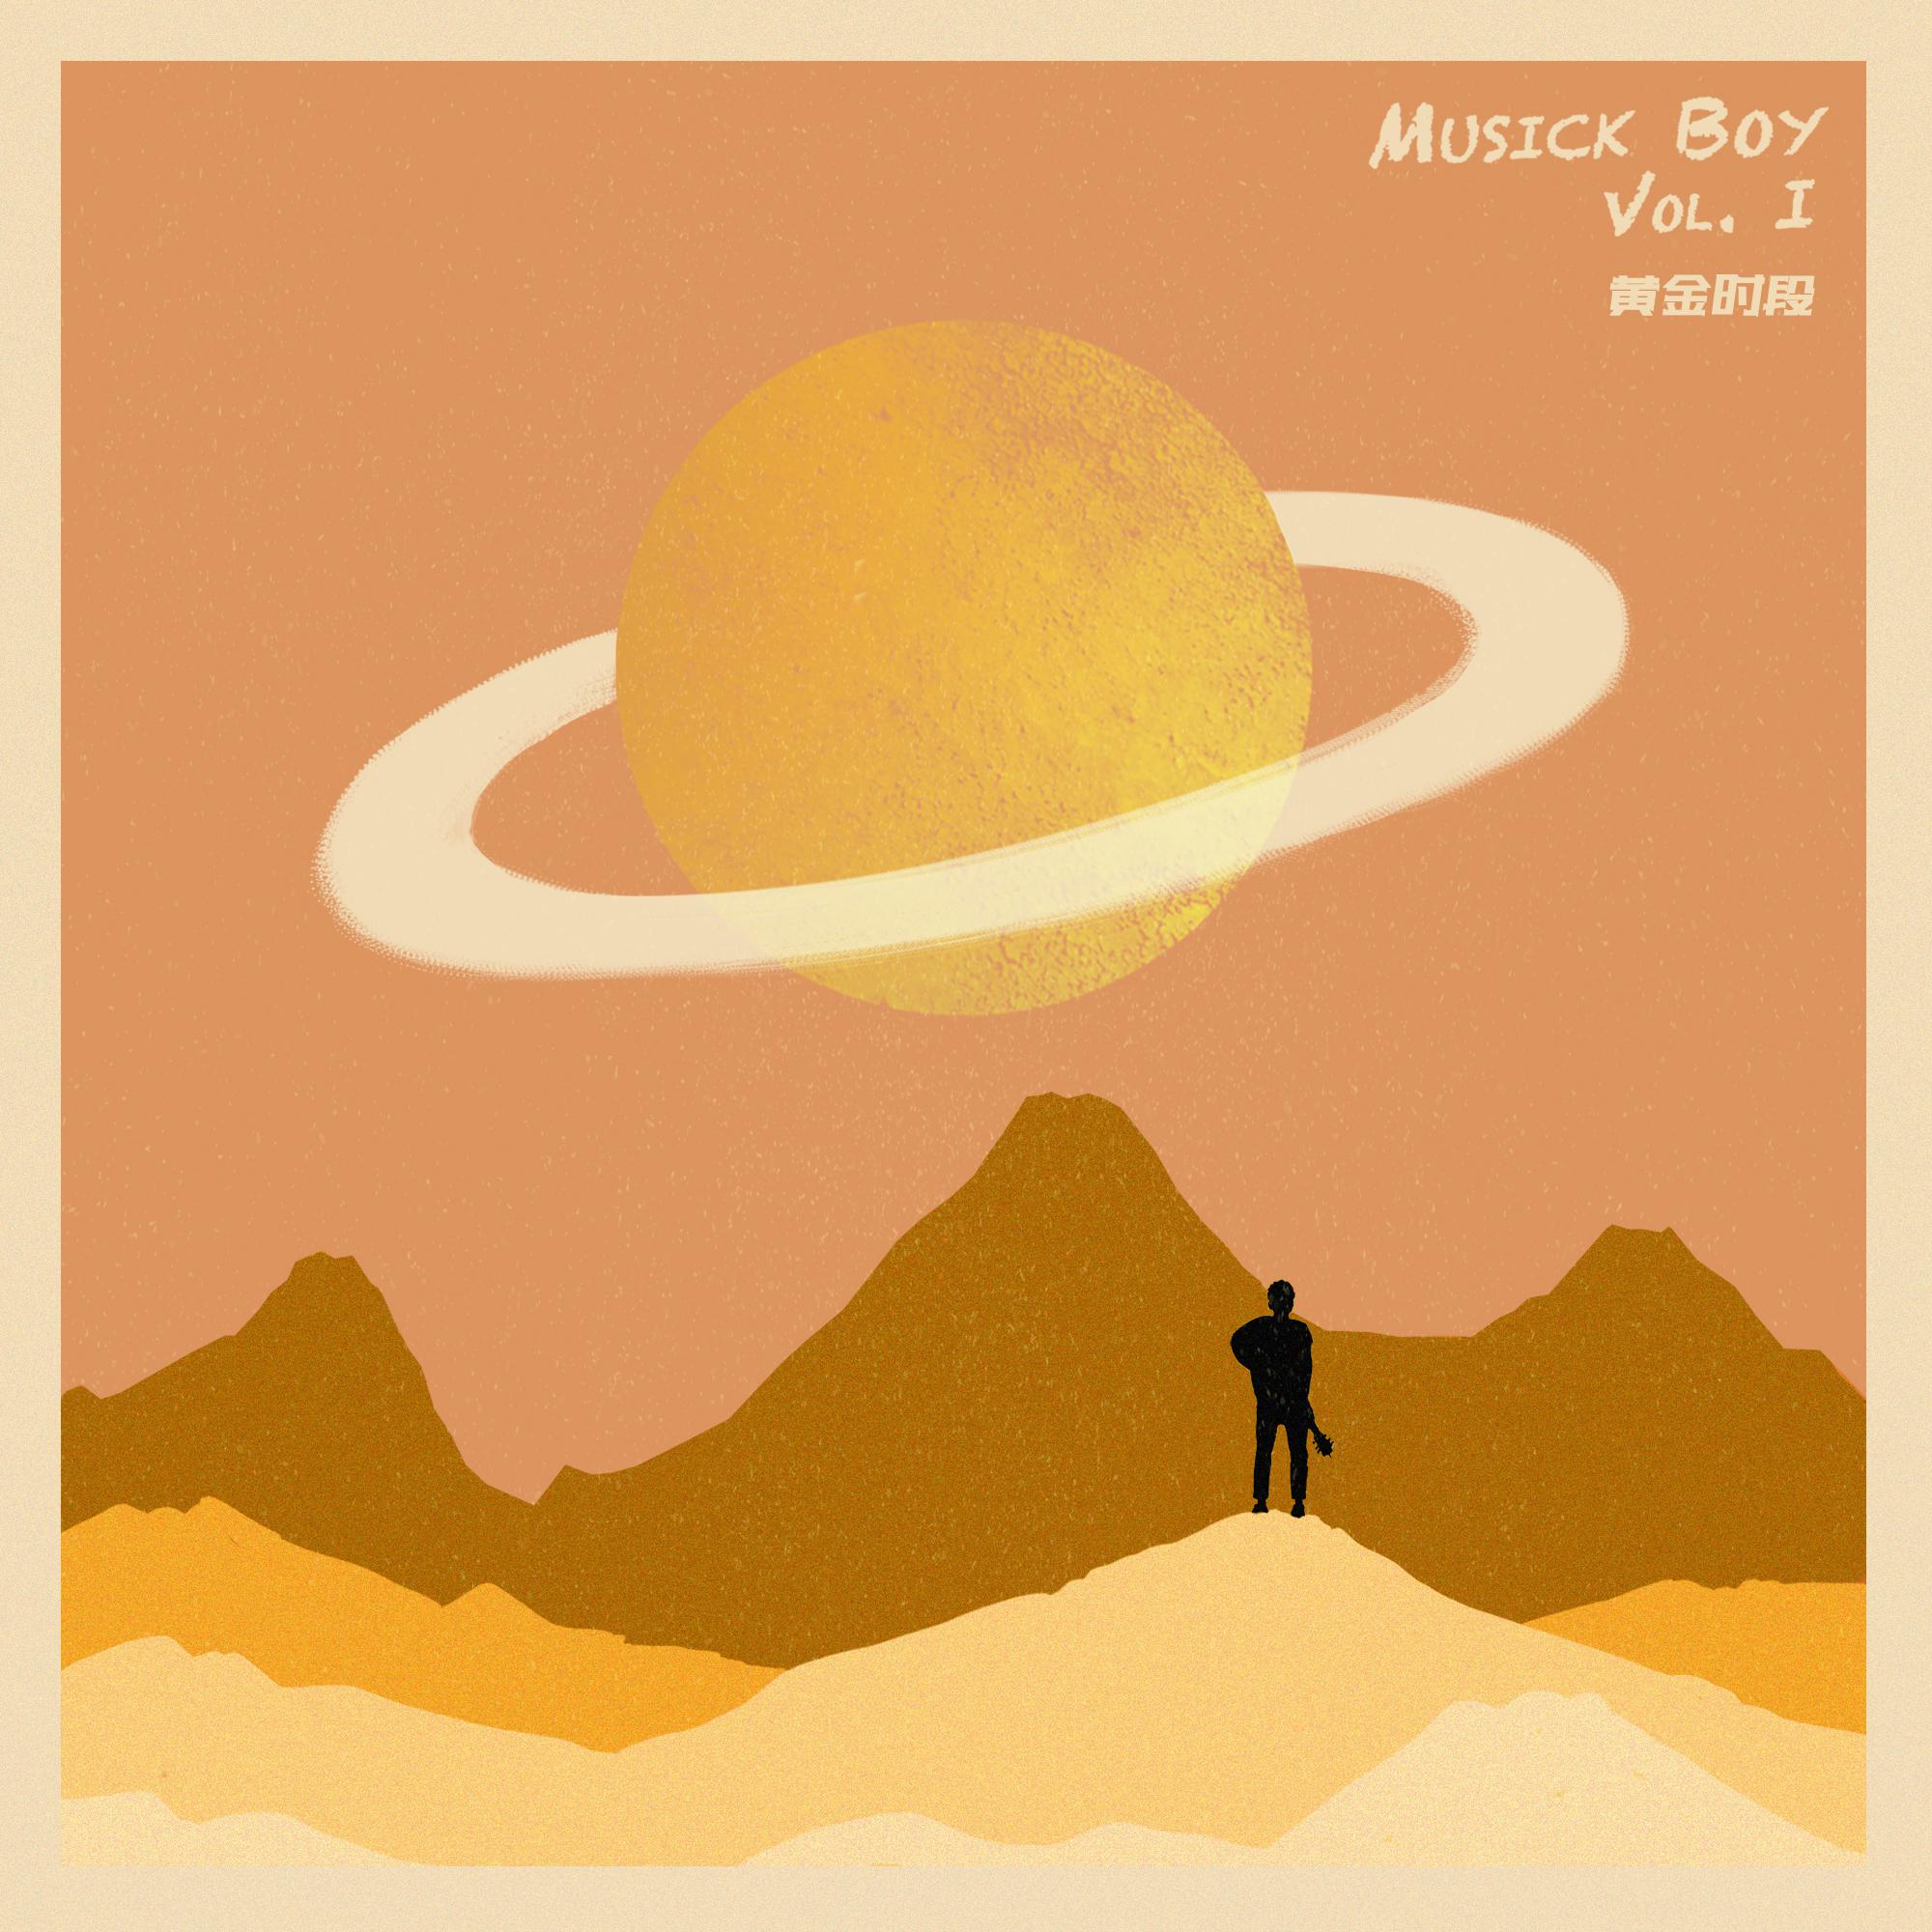 Musick Boy Vol. I 黄金时段专辑